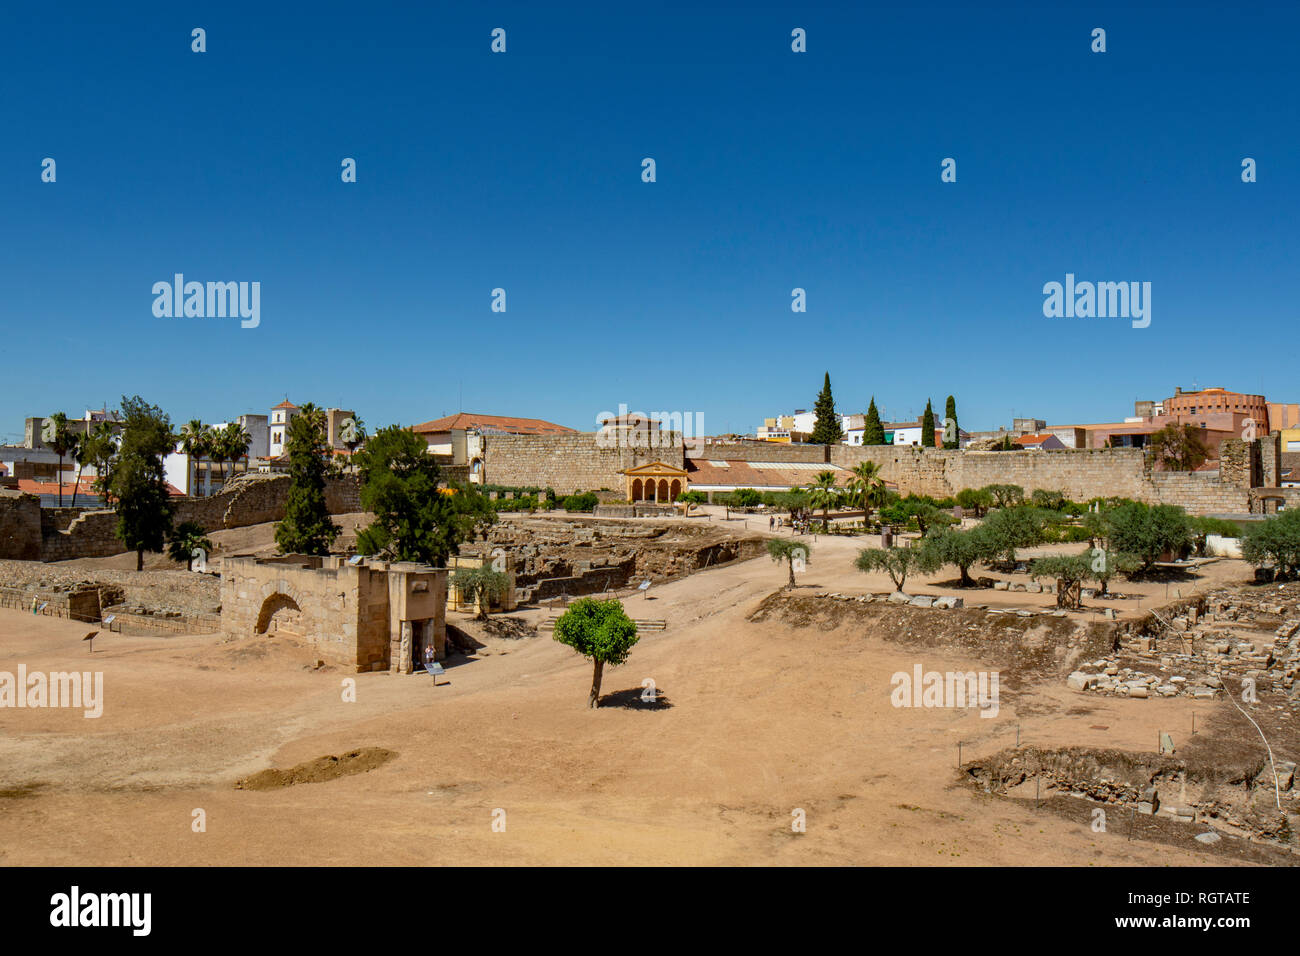 Merida, Badajoz, Espagne ; Mai 2015 : ruines de la vieille Alcazaba arabe site archéologique de Mérida, UNESCO World Heritage Site. Banque D'Images